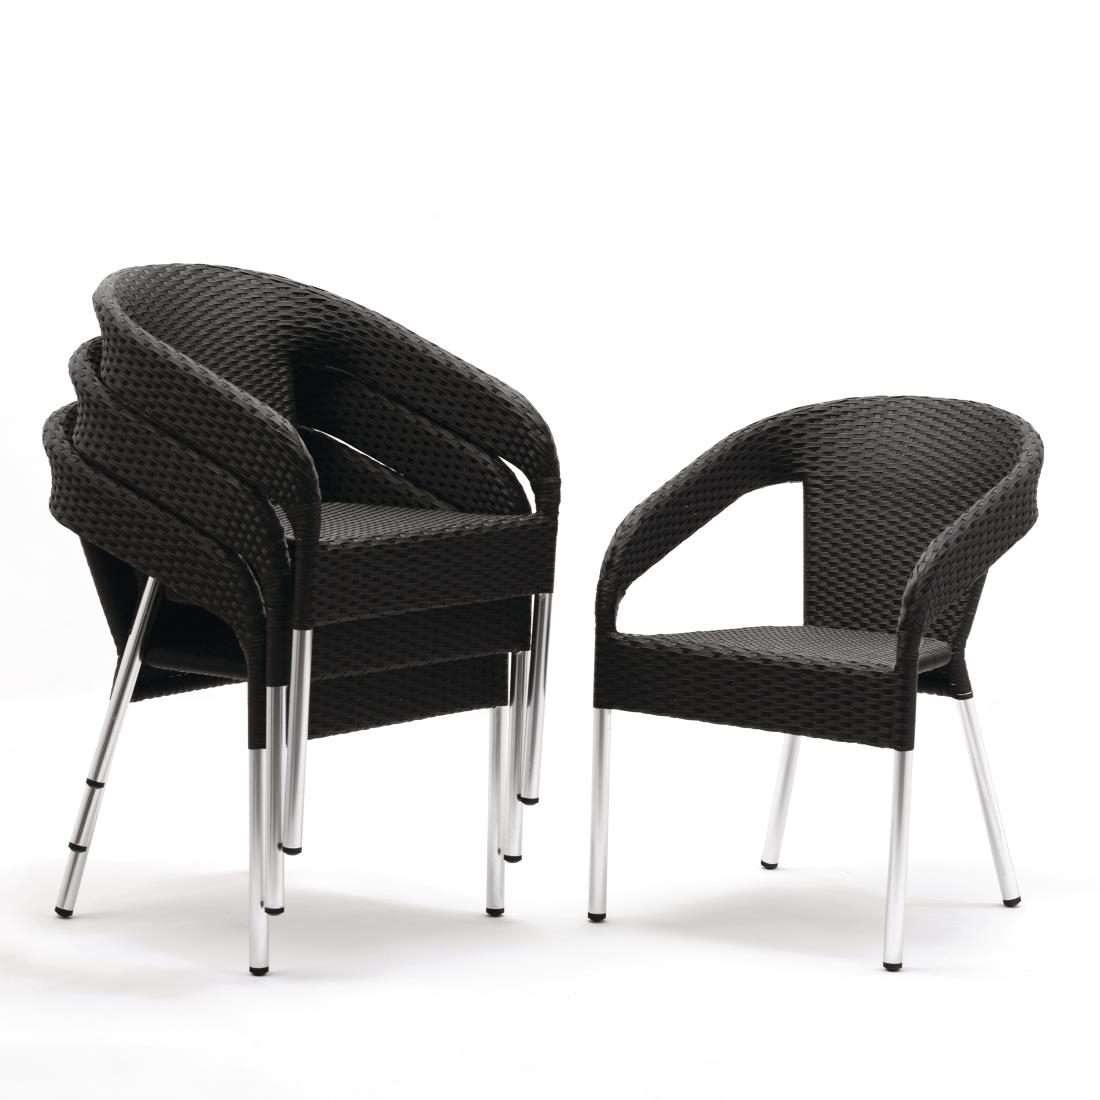 Rattan + Aluminium Chair CG2 - Charcoal